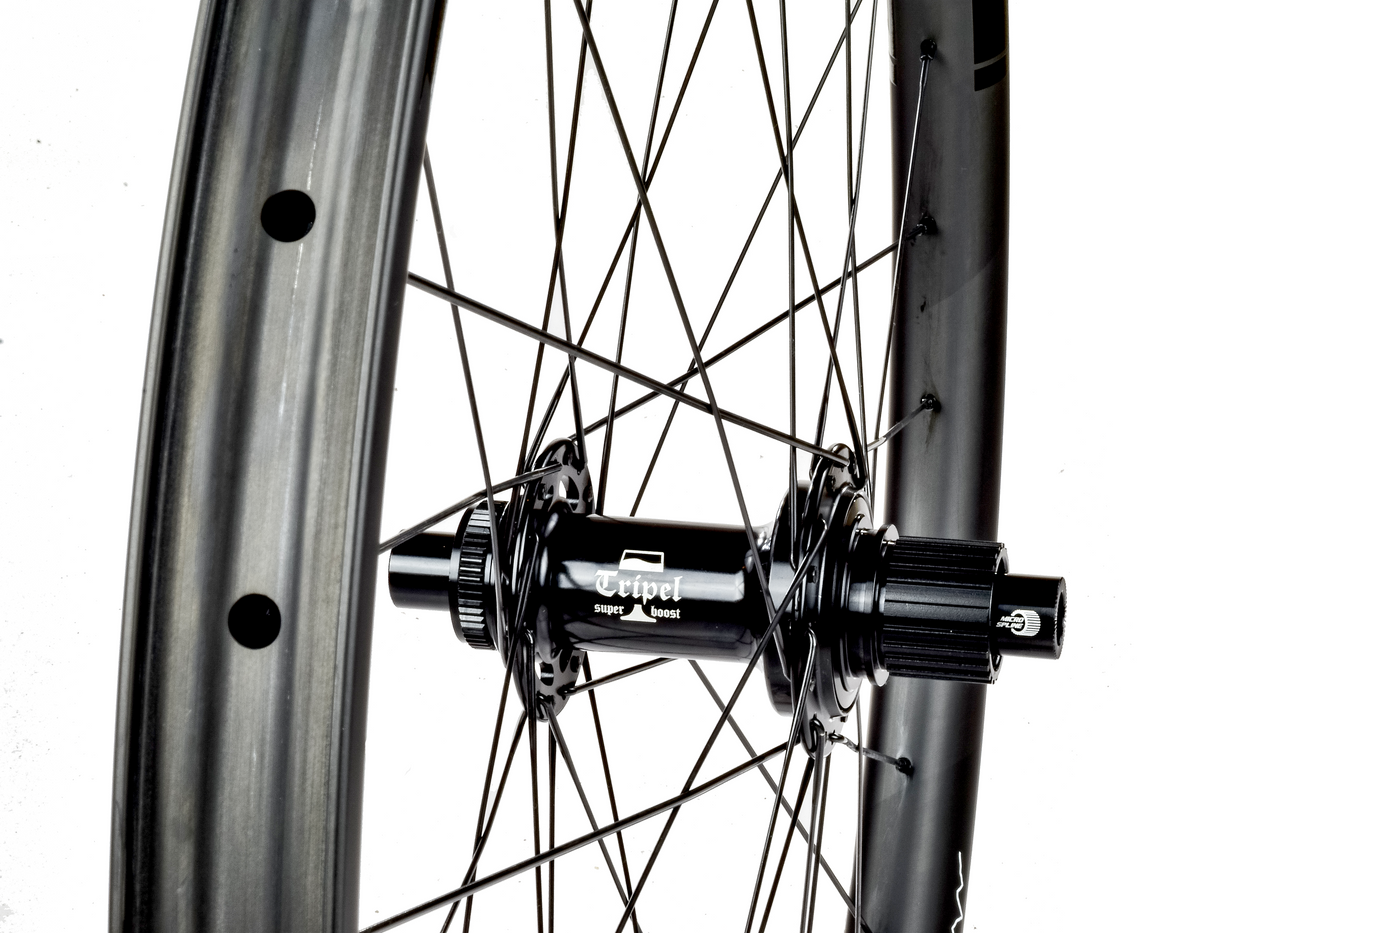 Ridgeline 27.5 Carbon Front Boost Wheel